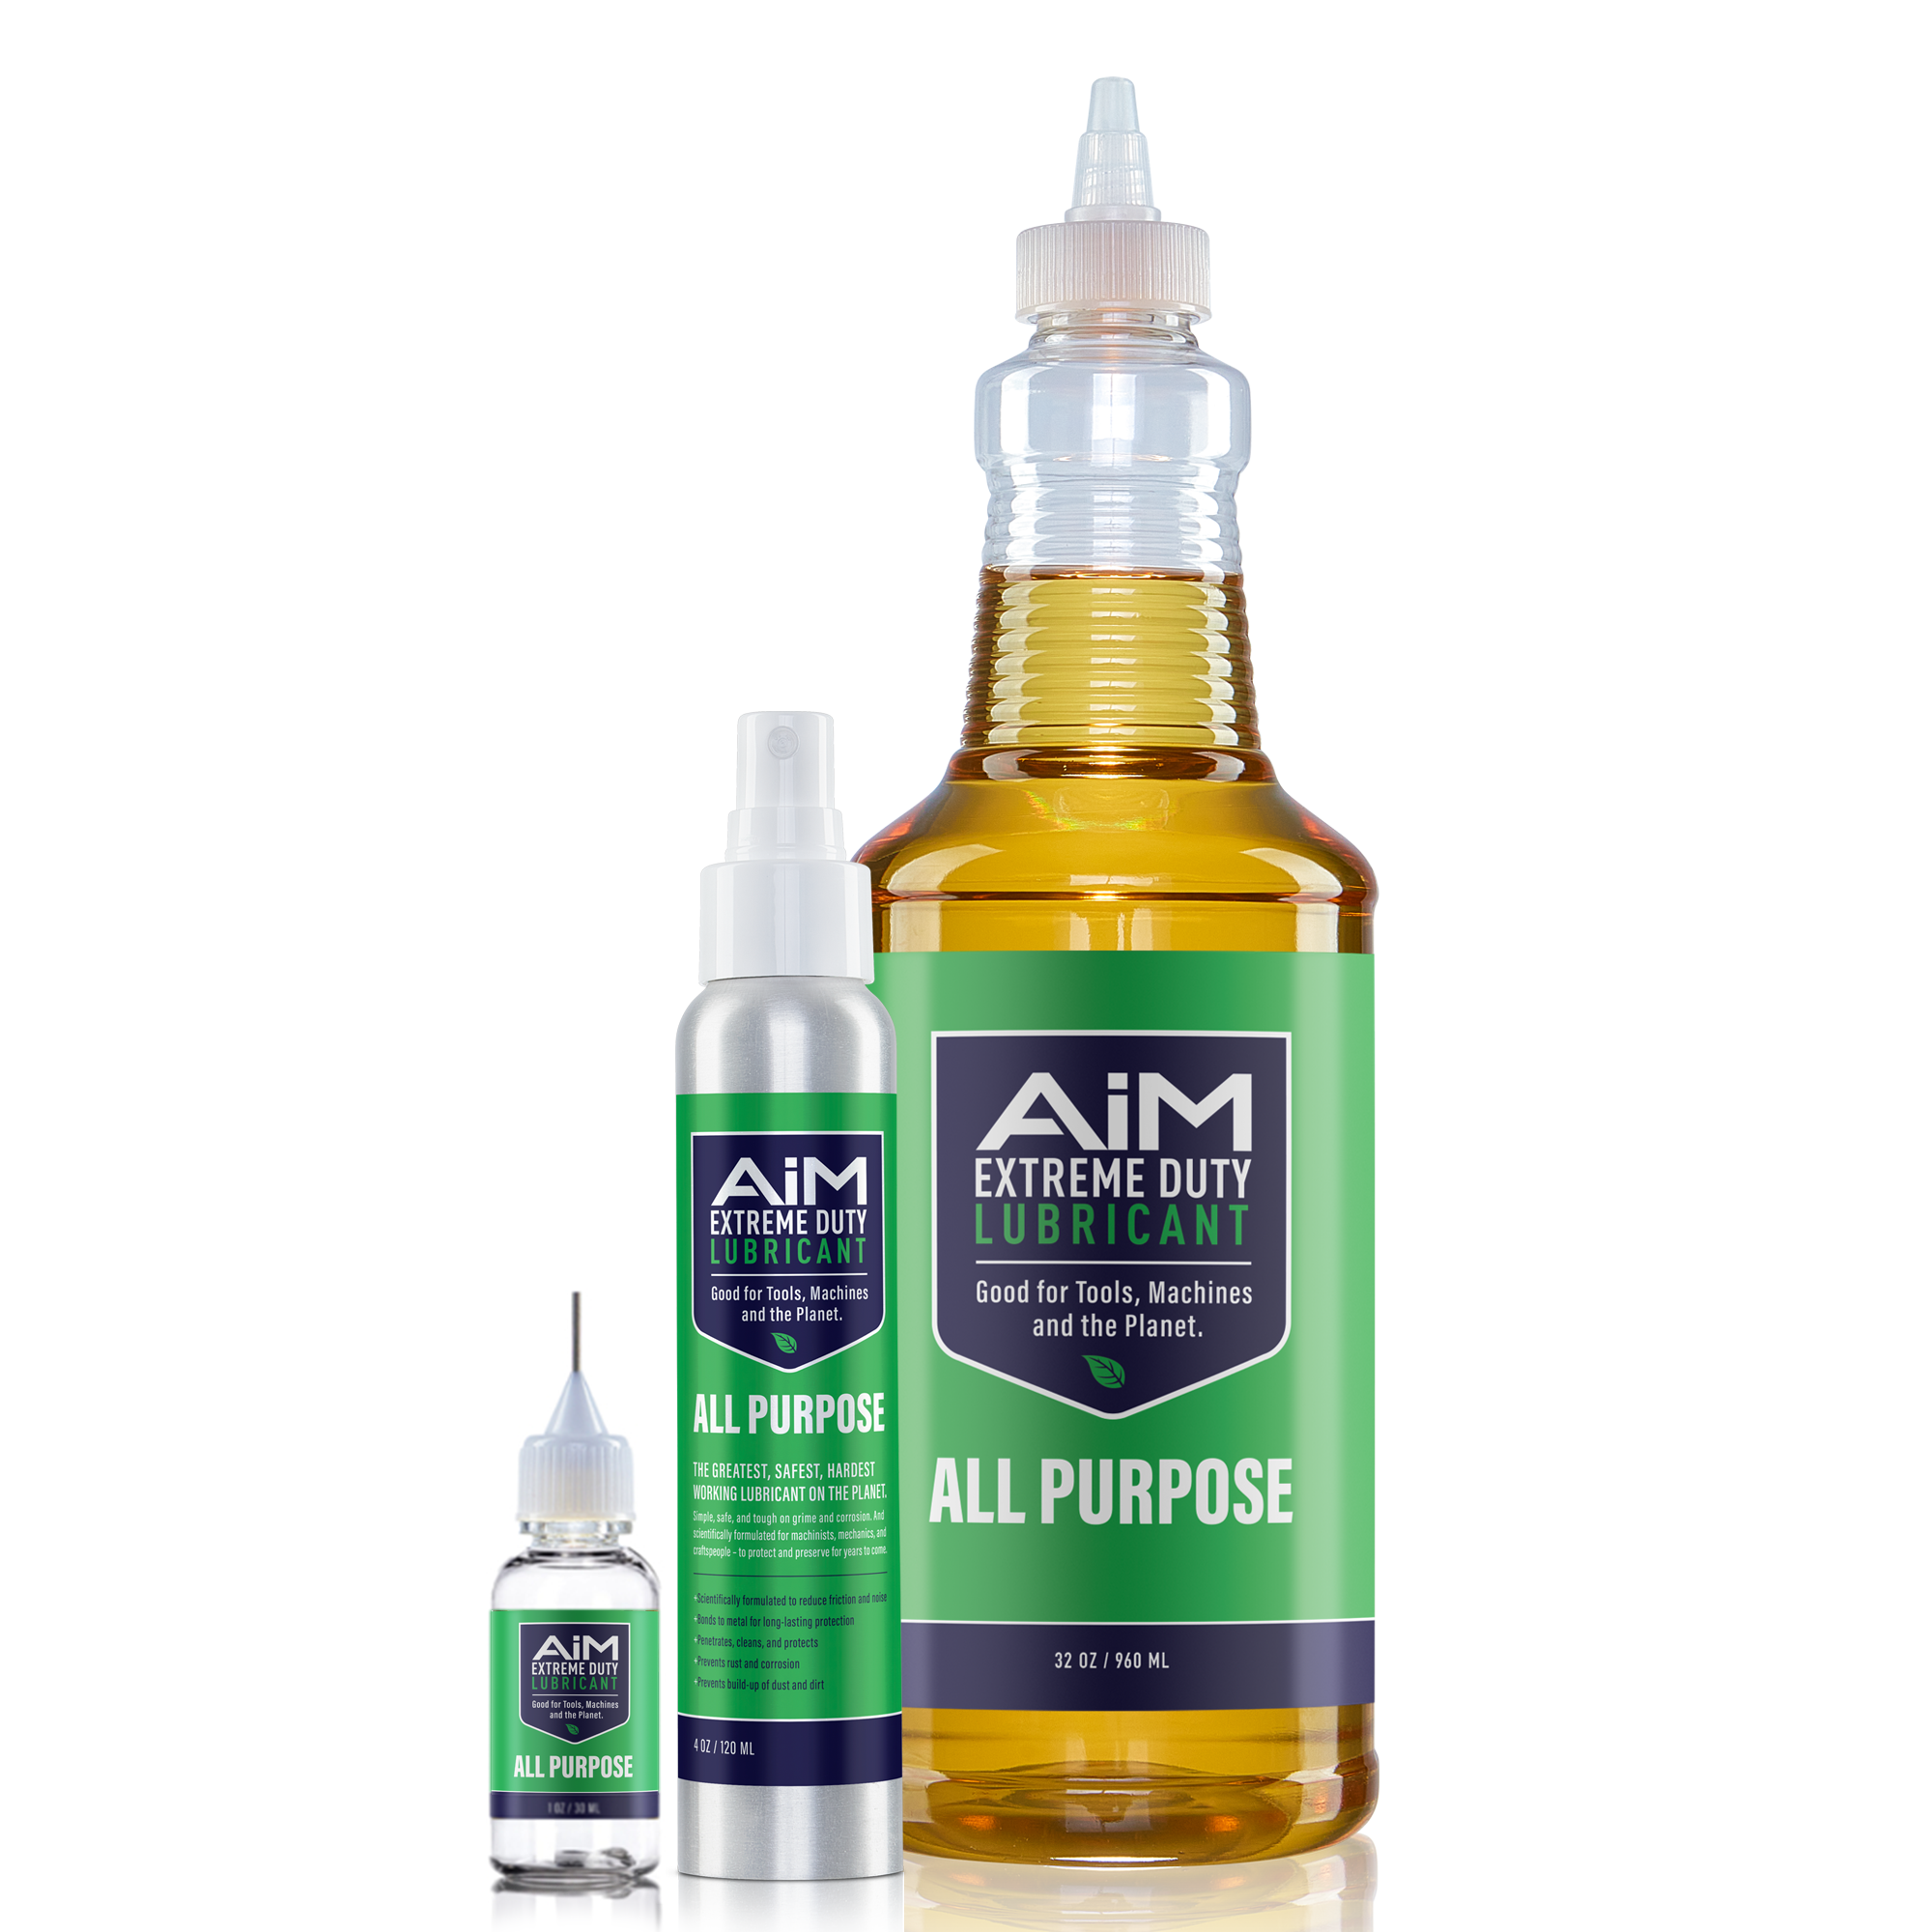 AiM Extreme Duty Lubricant | All Purpose | Large Kit |  32oz yorker + sprayer bottle + precision bottle